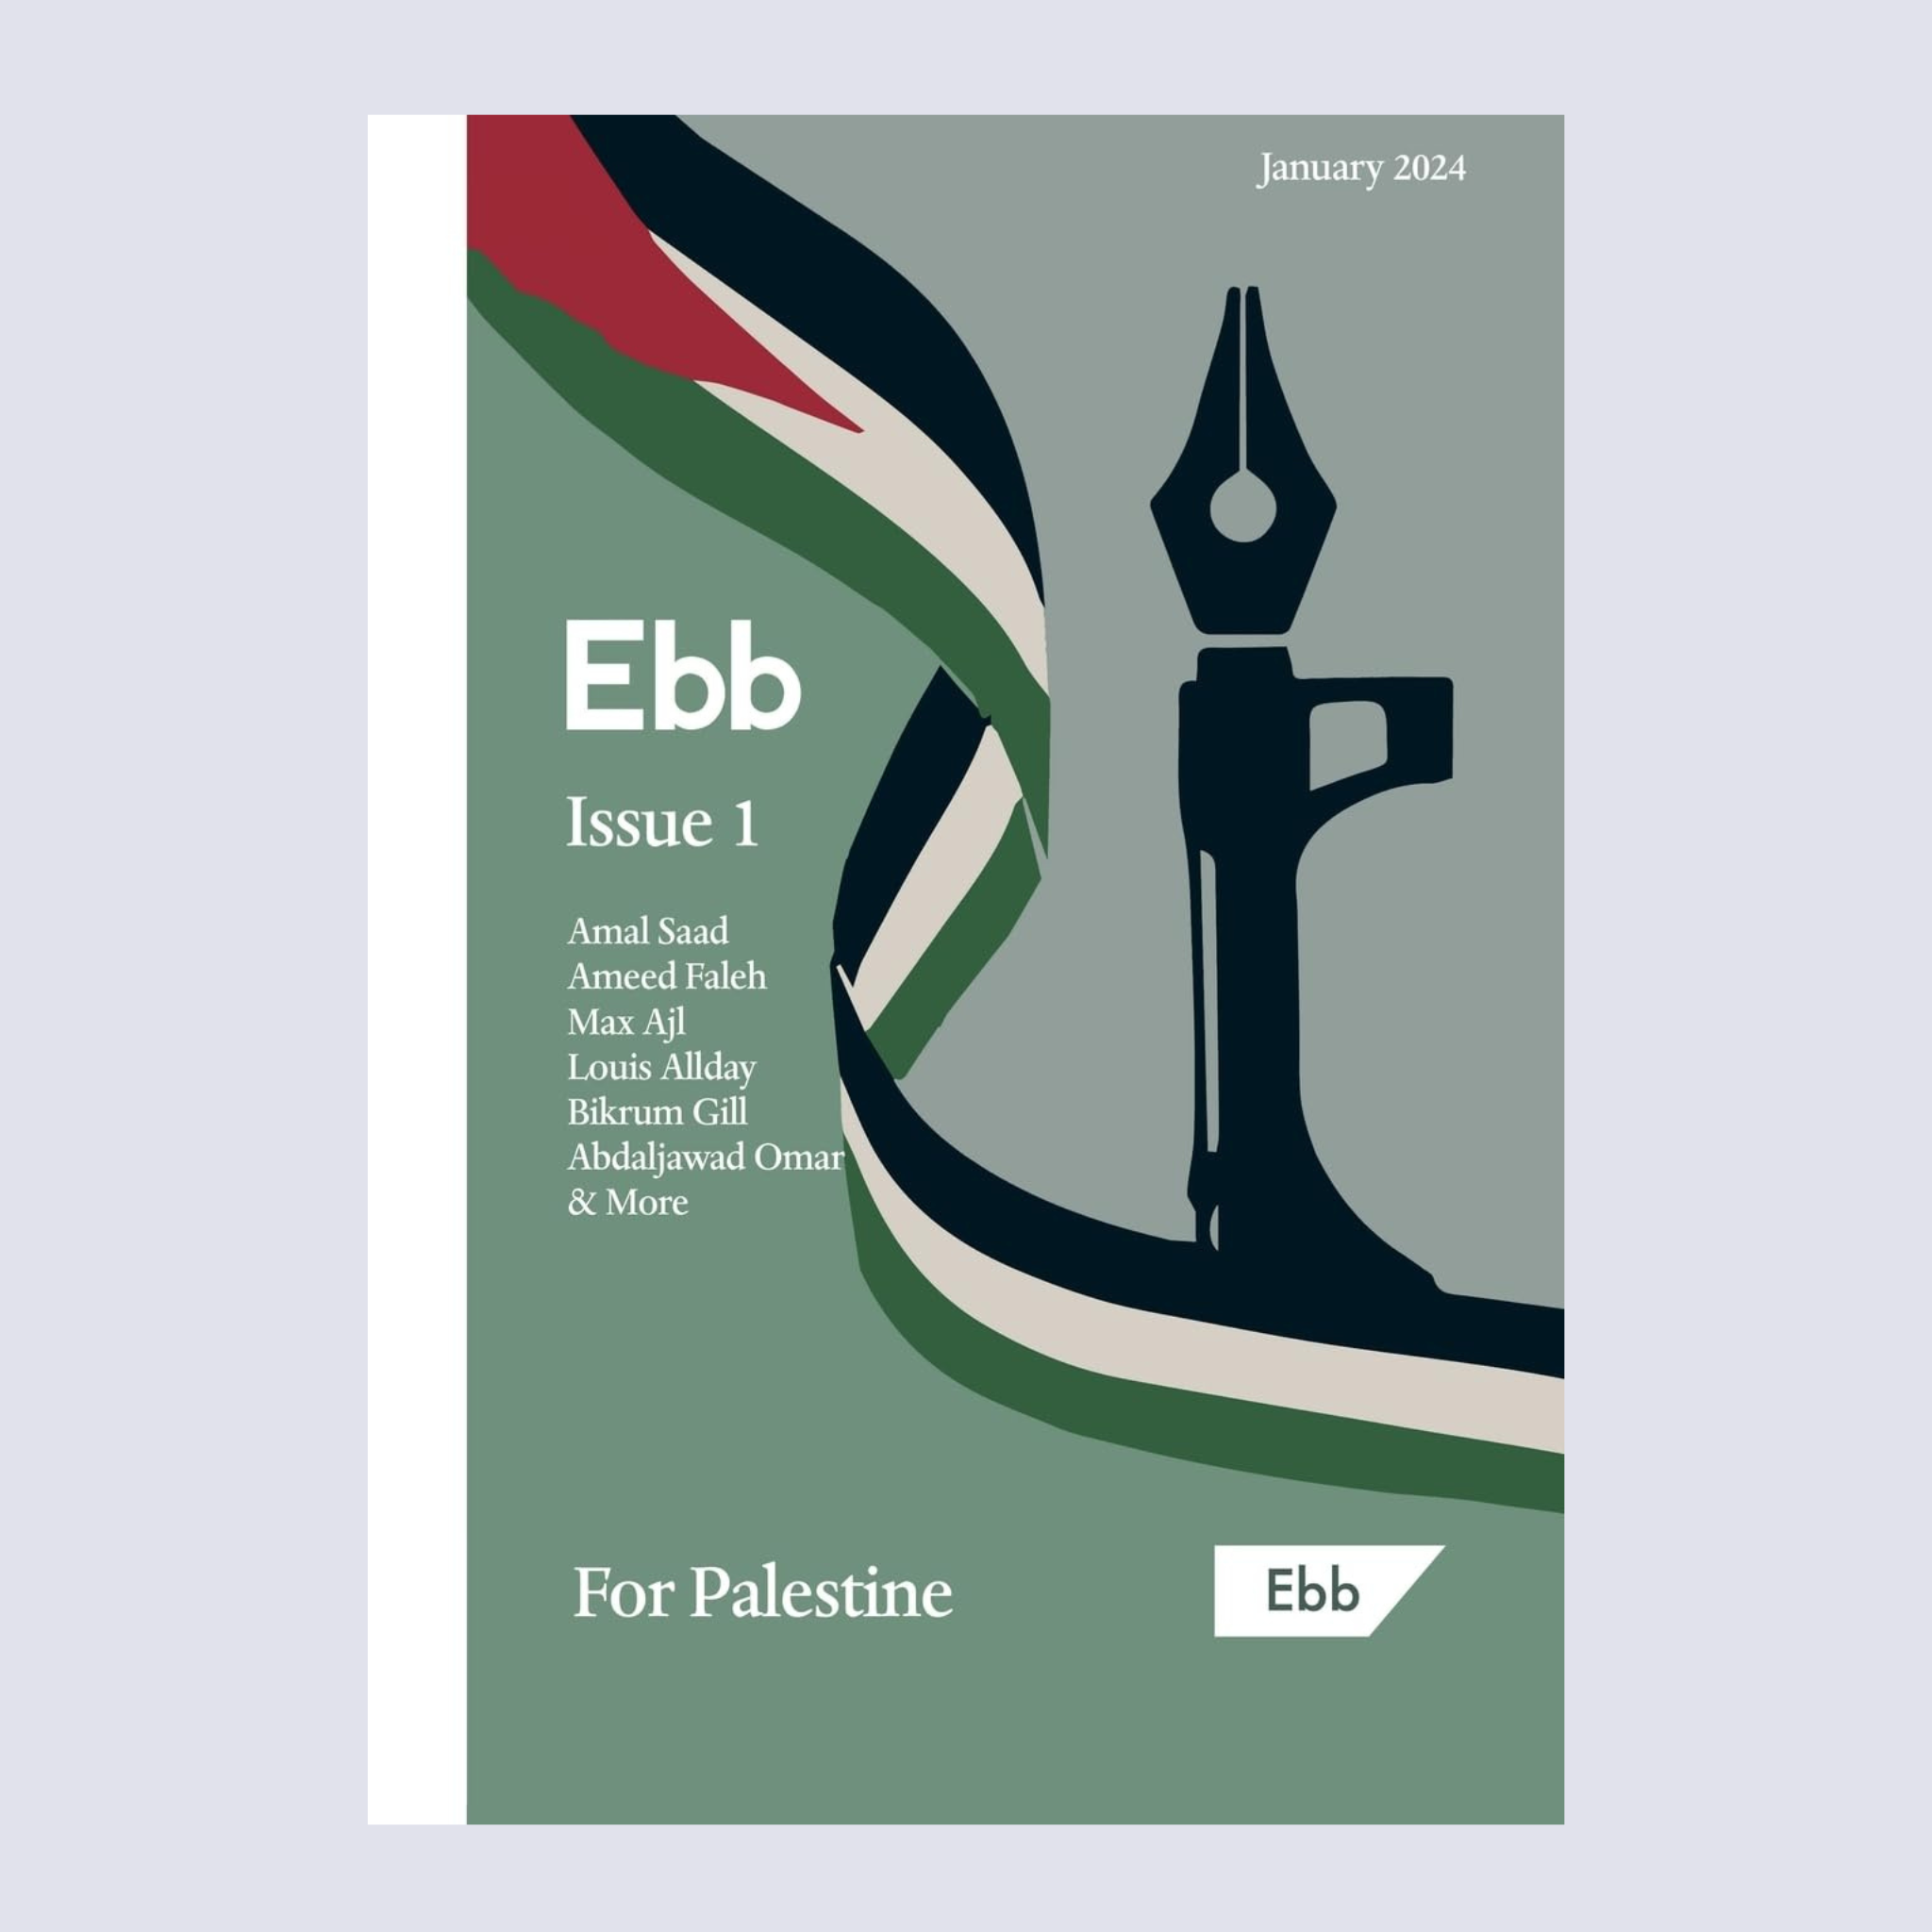 Ebb Magazine Issue 1: For Palestine